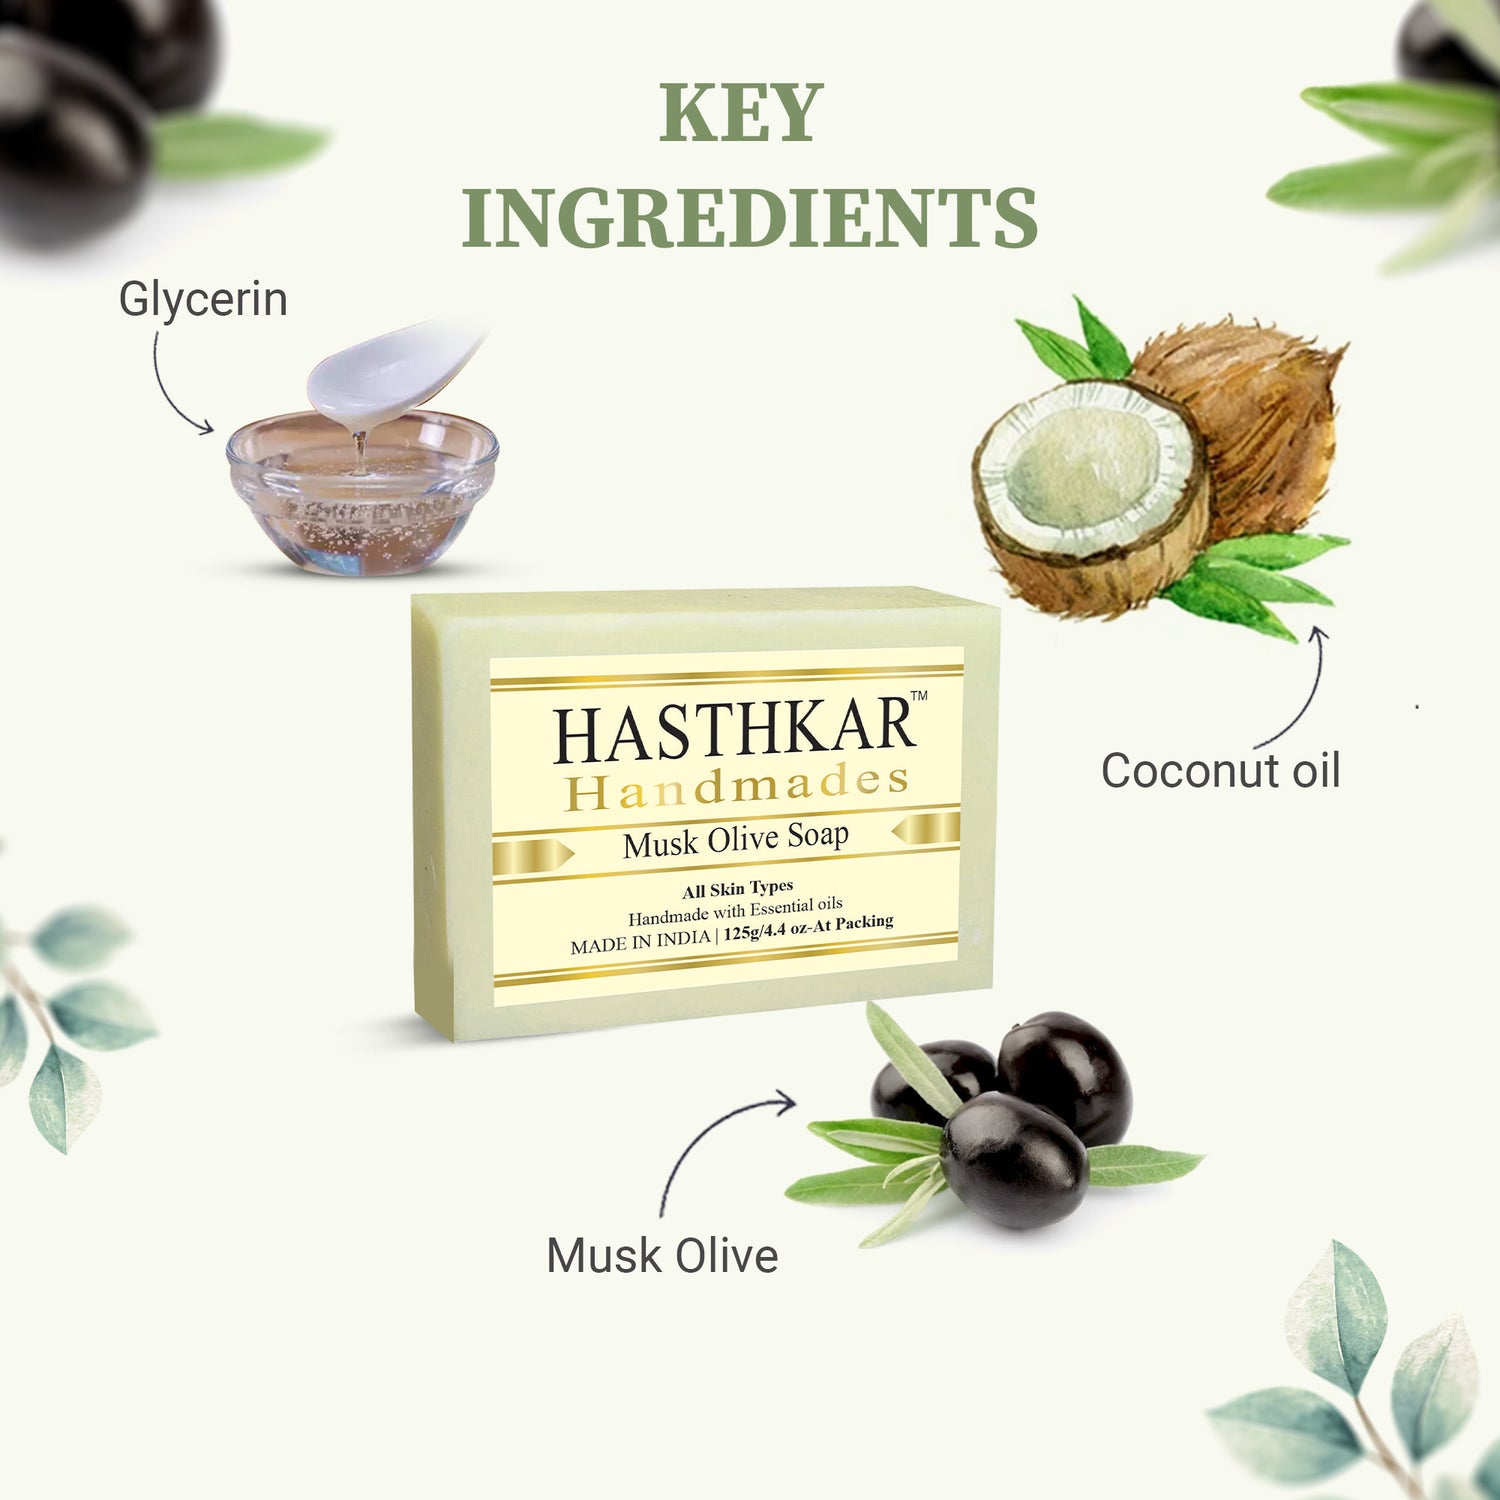 Images of Hasthkar handmades musk oilve bathing soap men women key ingredients 